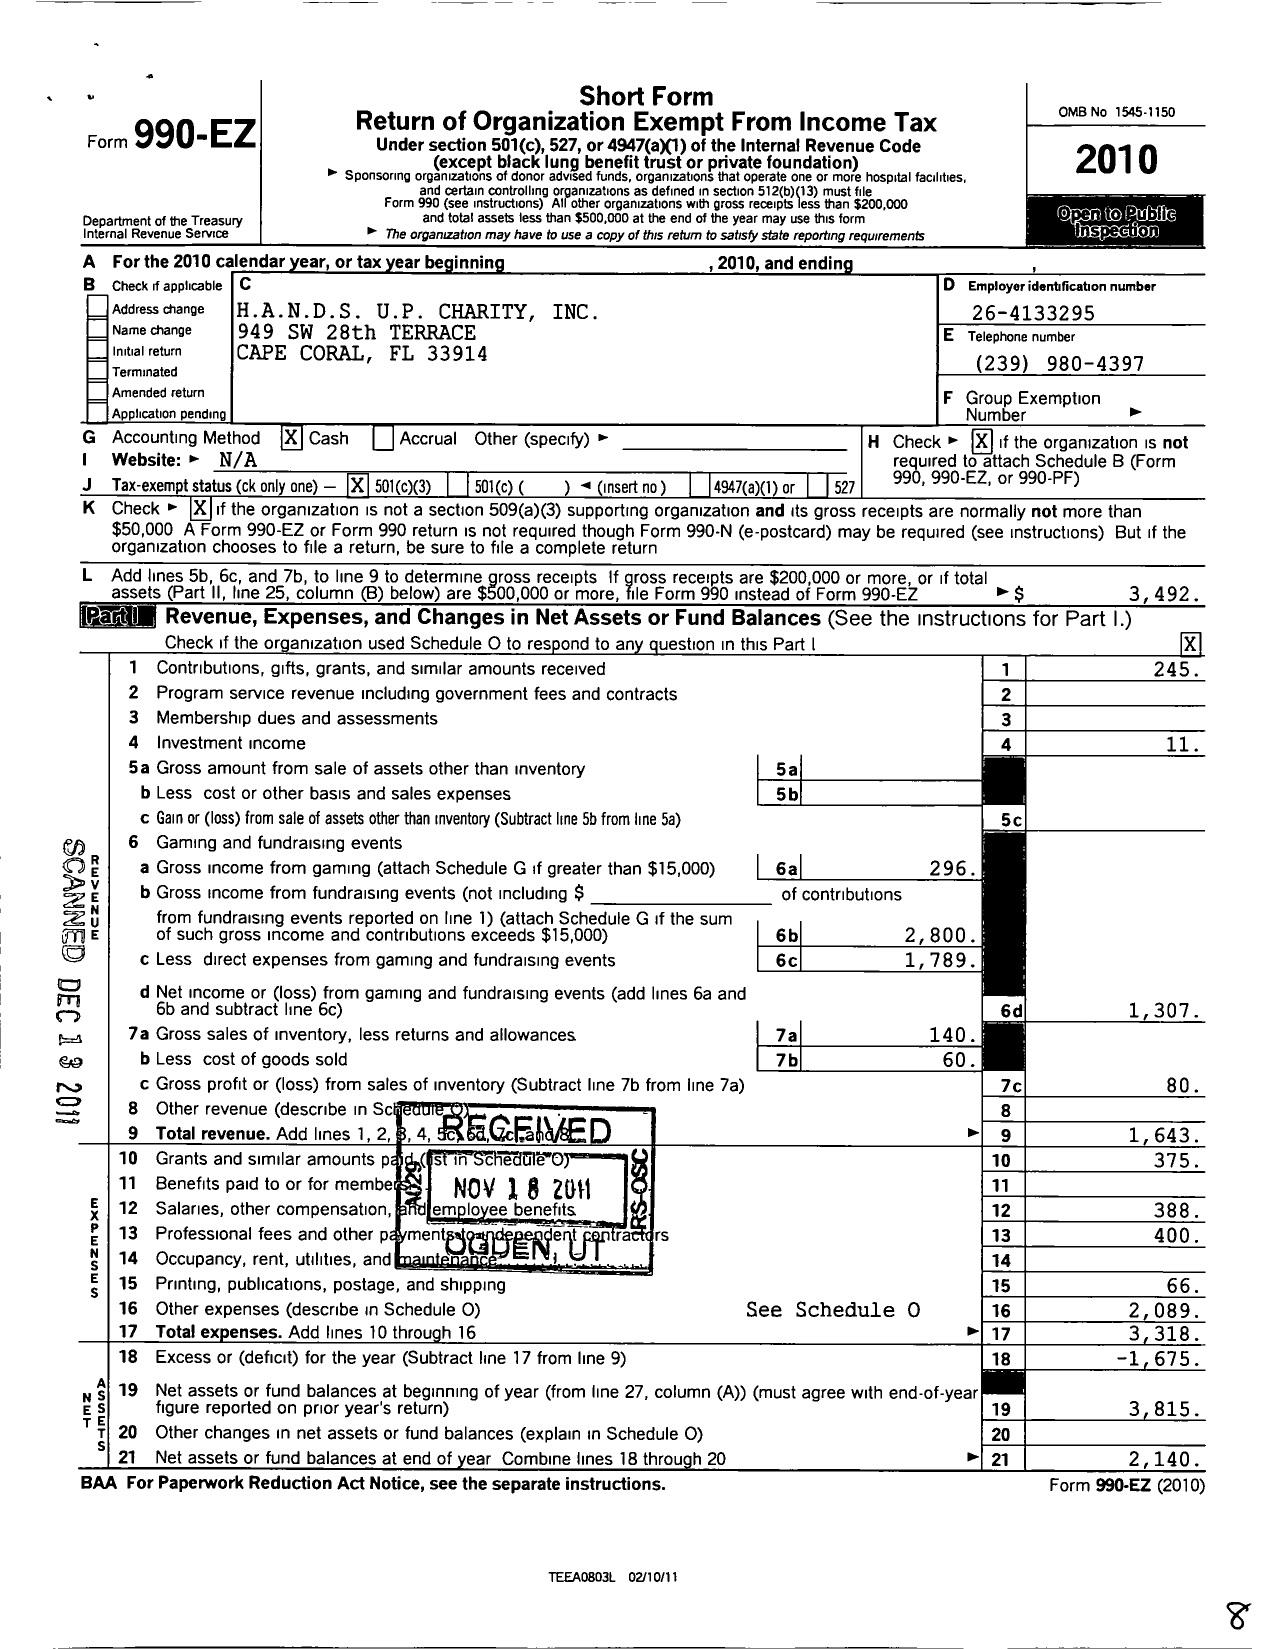 Image of first page of 2010 Form 990EZ for H A N D S U P Charity